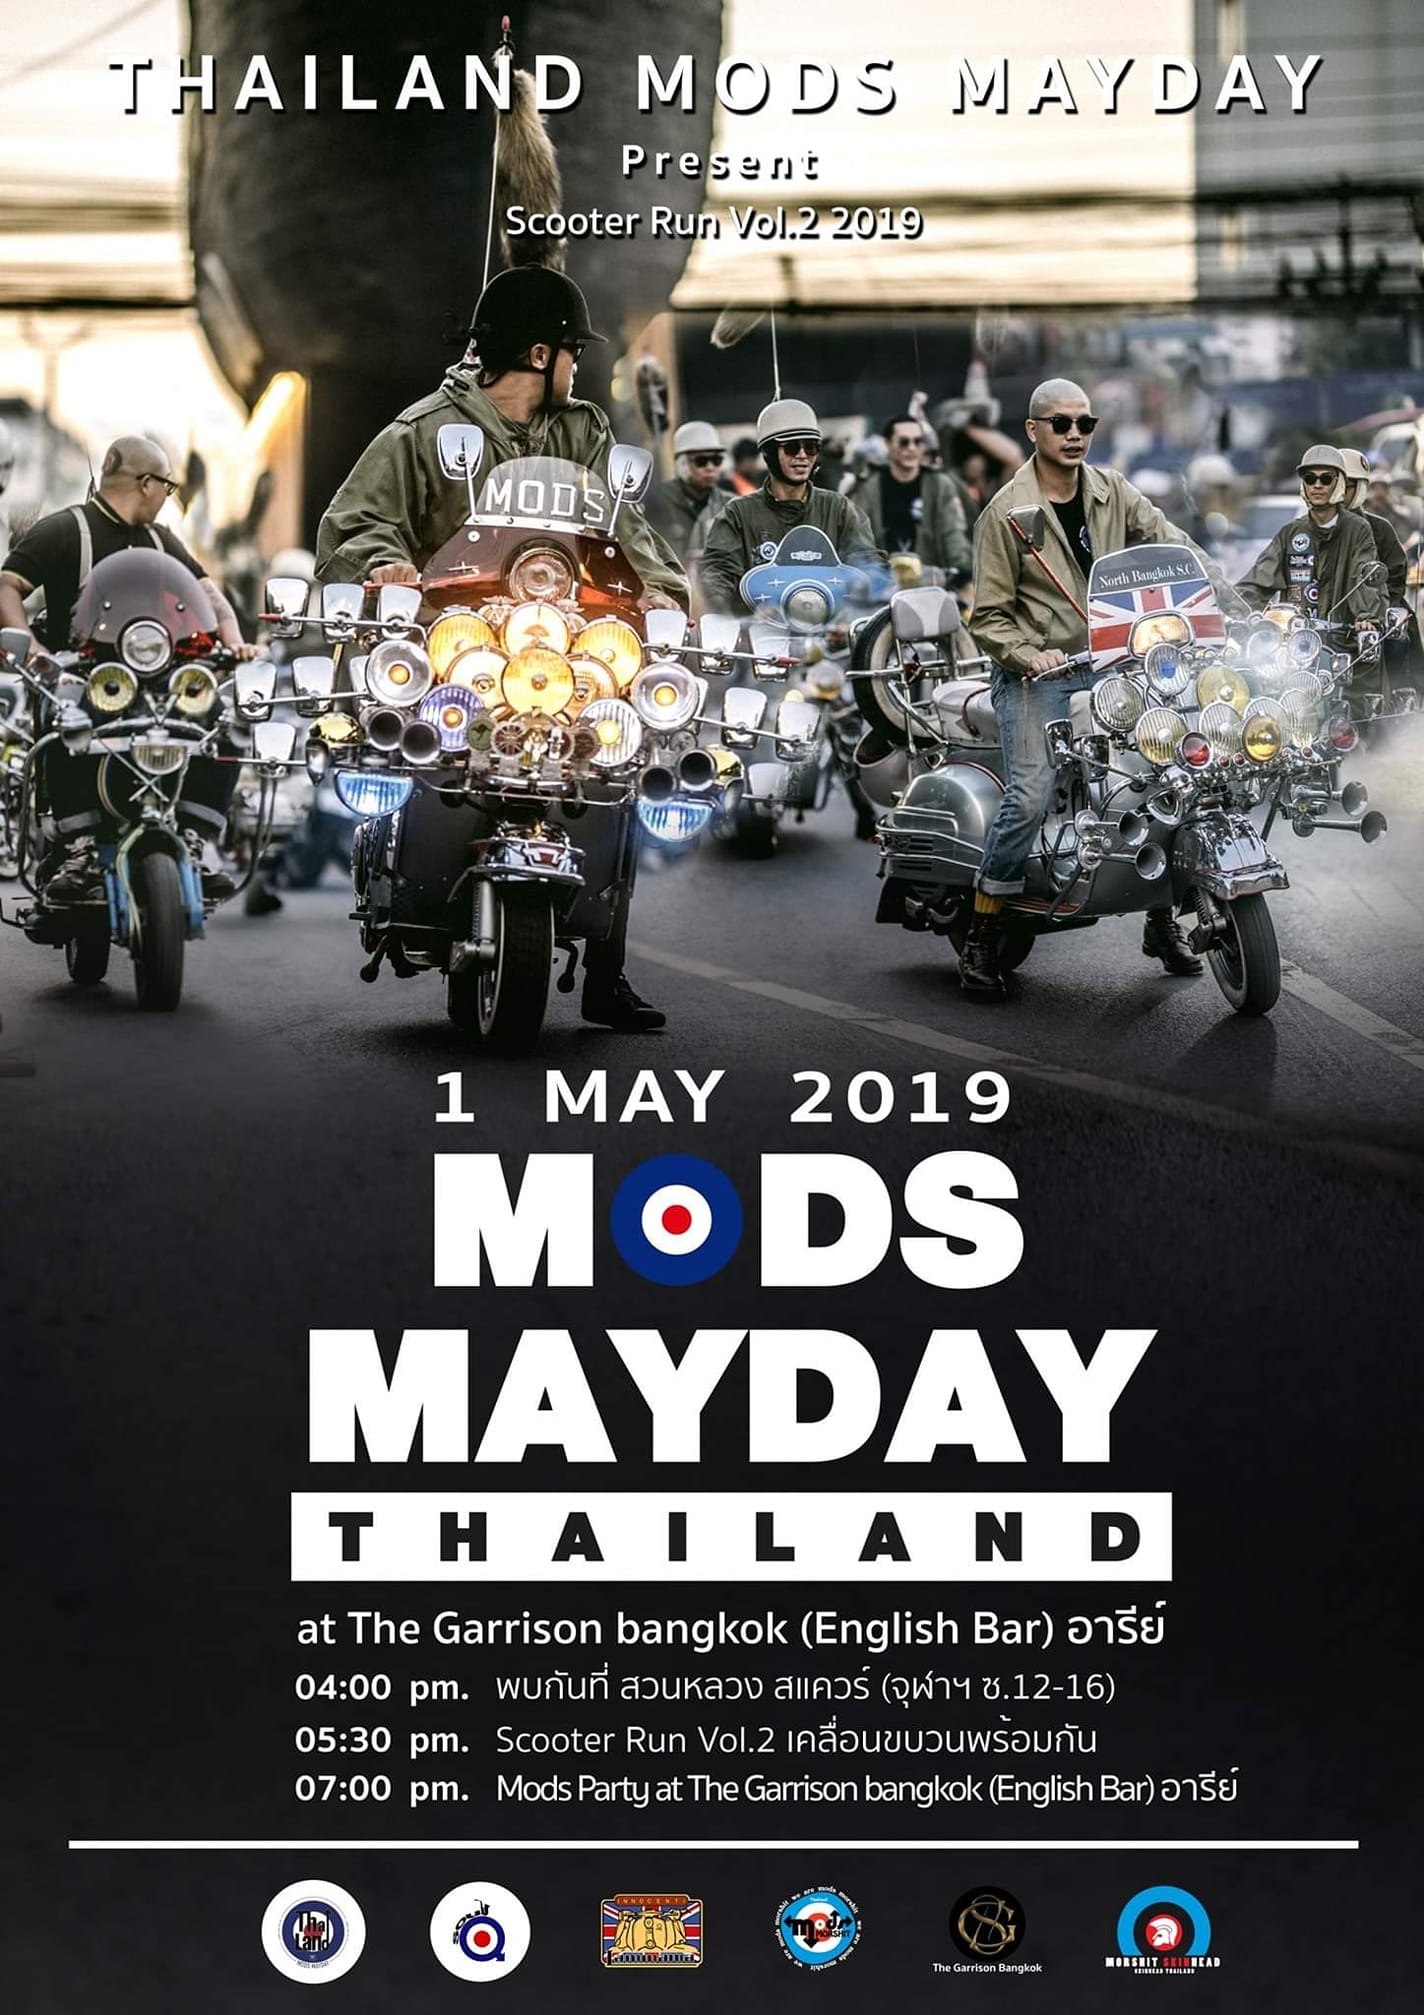 Thailand Mods Mayday 2019